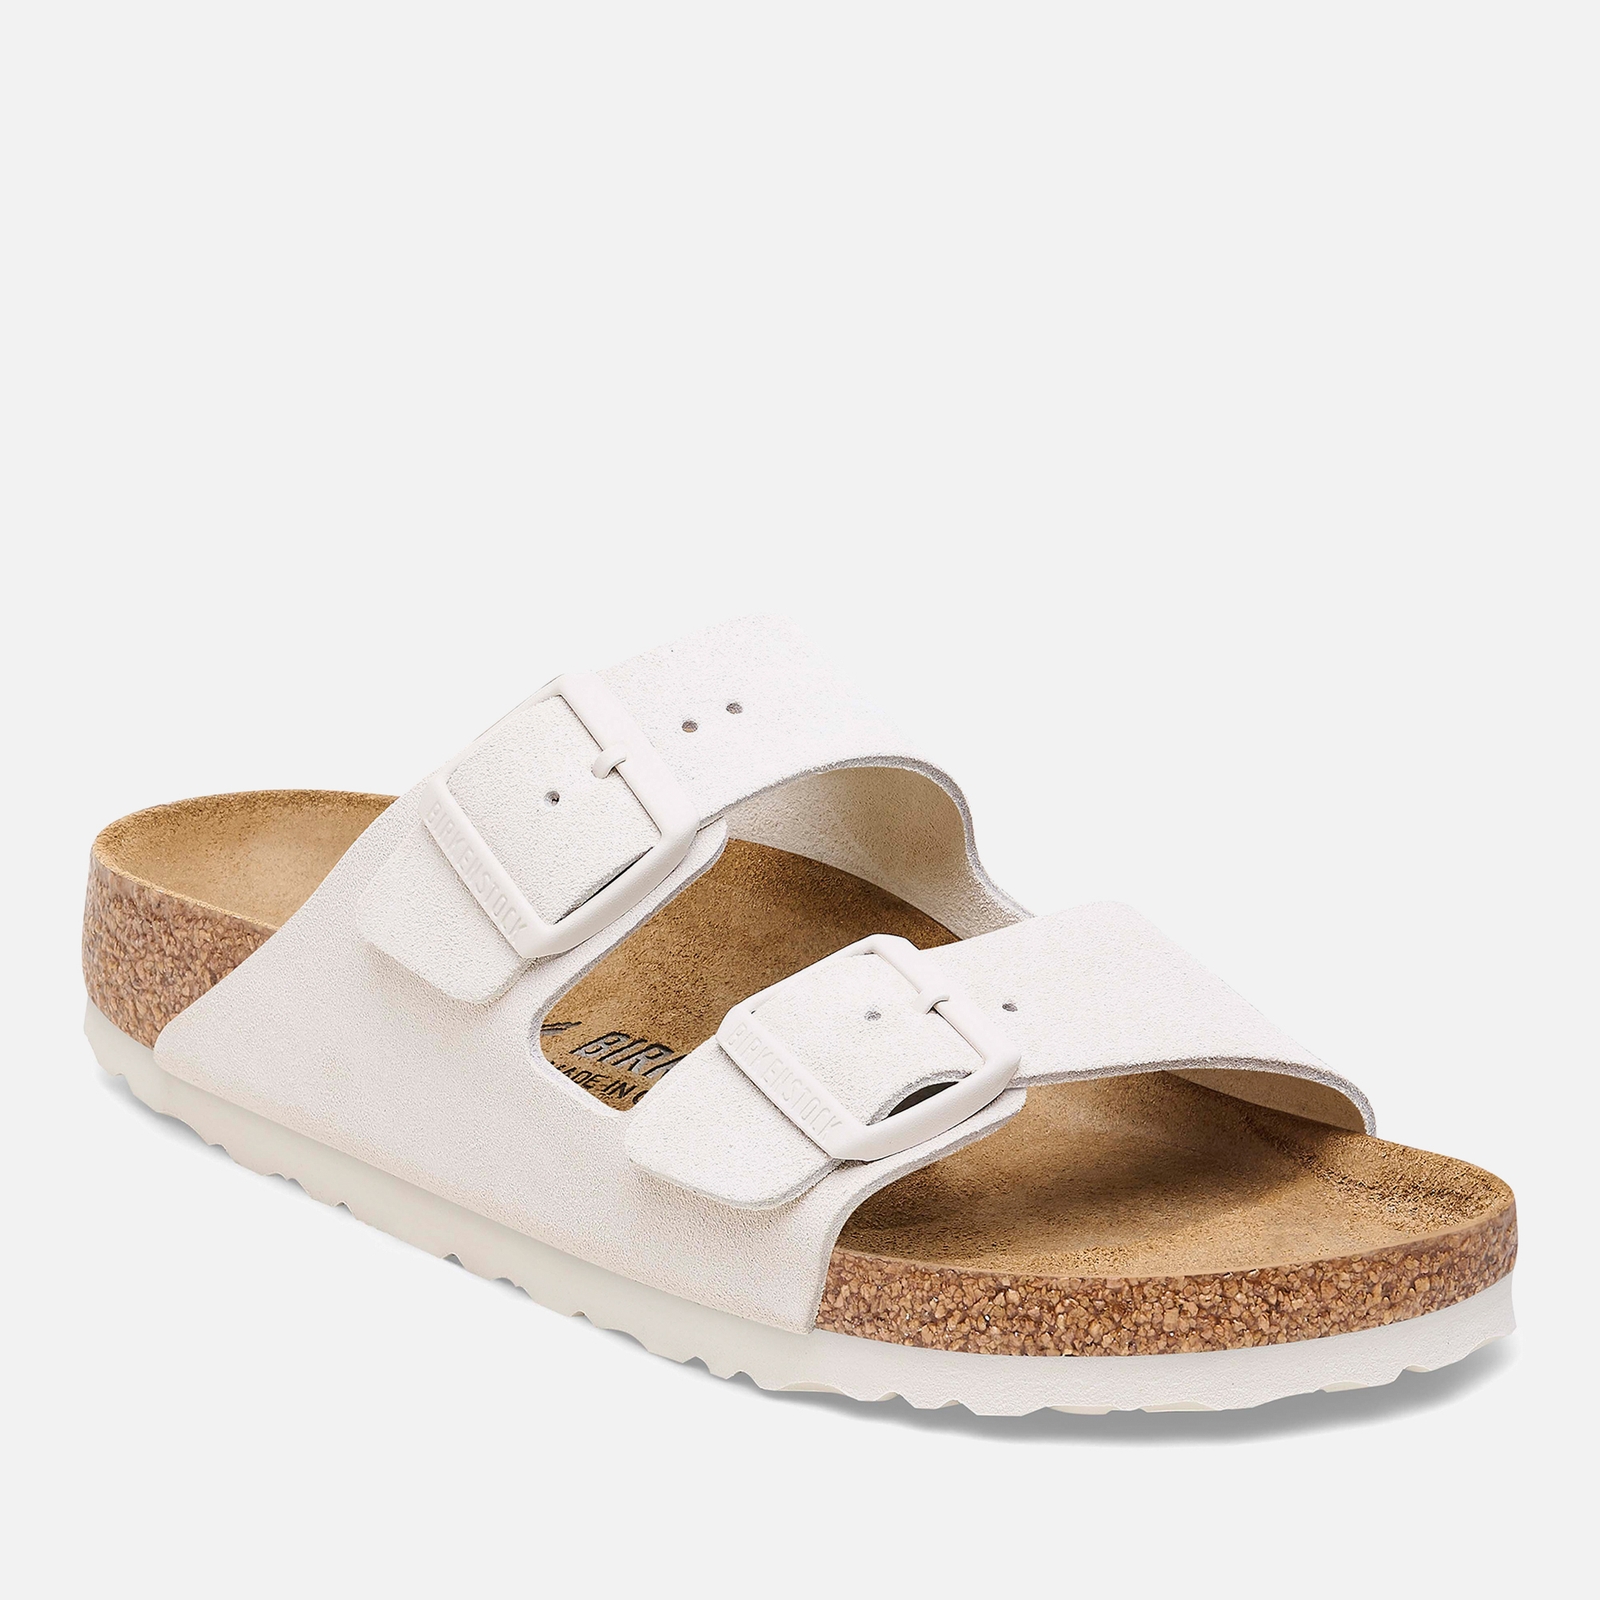 Birkenstock Women's Arizona Slim Fit Suede Double Strap Sandals - Antique White - UK 5